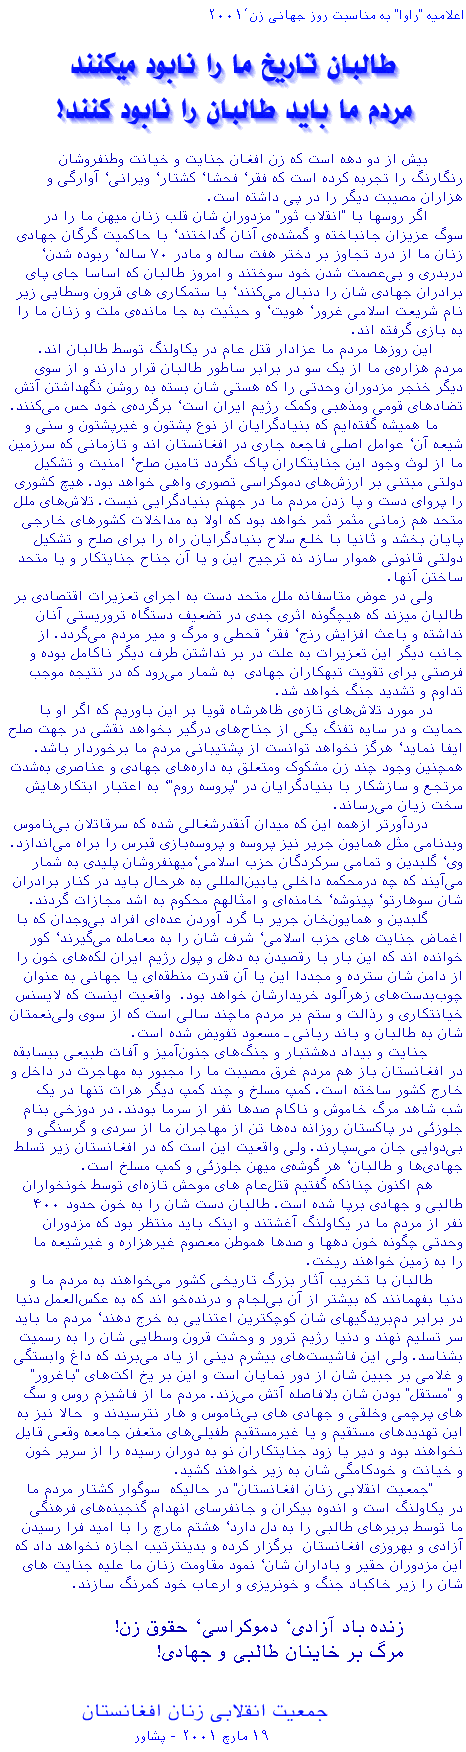 Statement of RAWA on the International Women's Day, March 8, 2001 (Farsi)